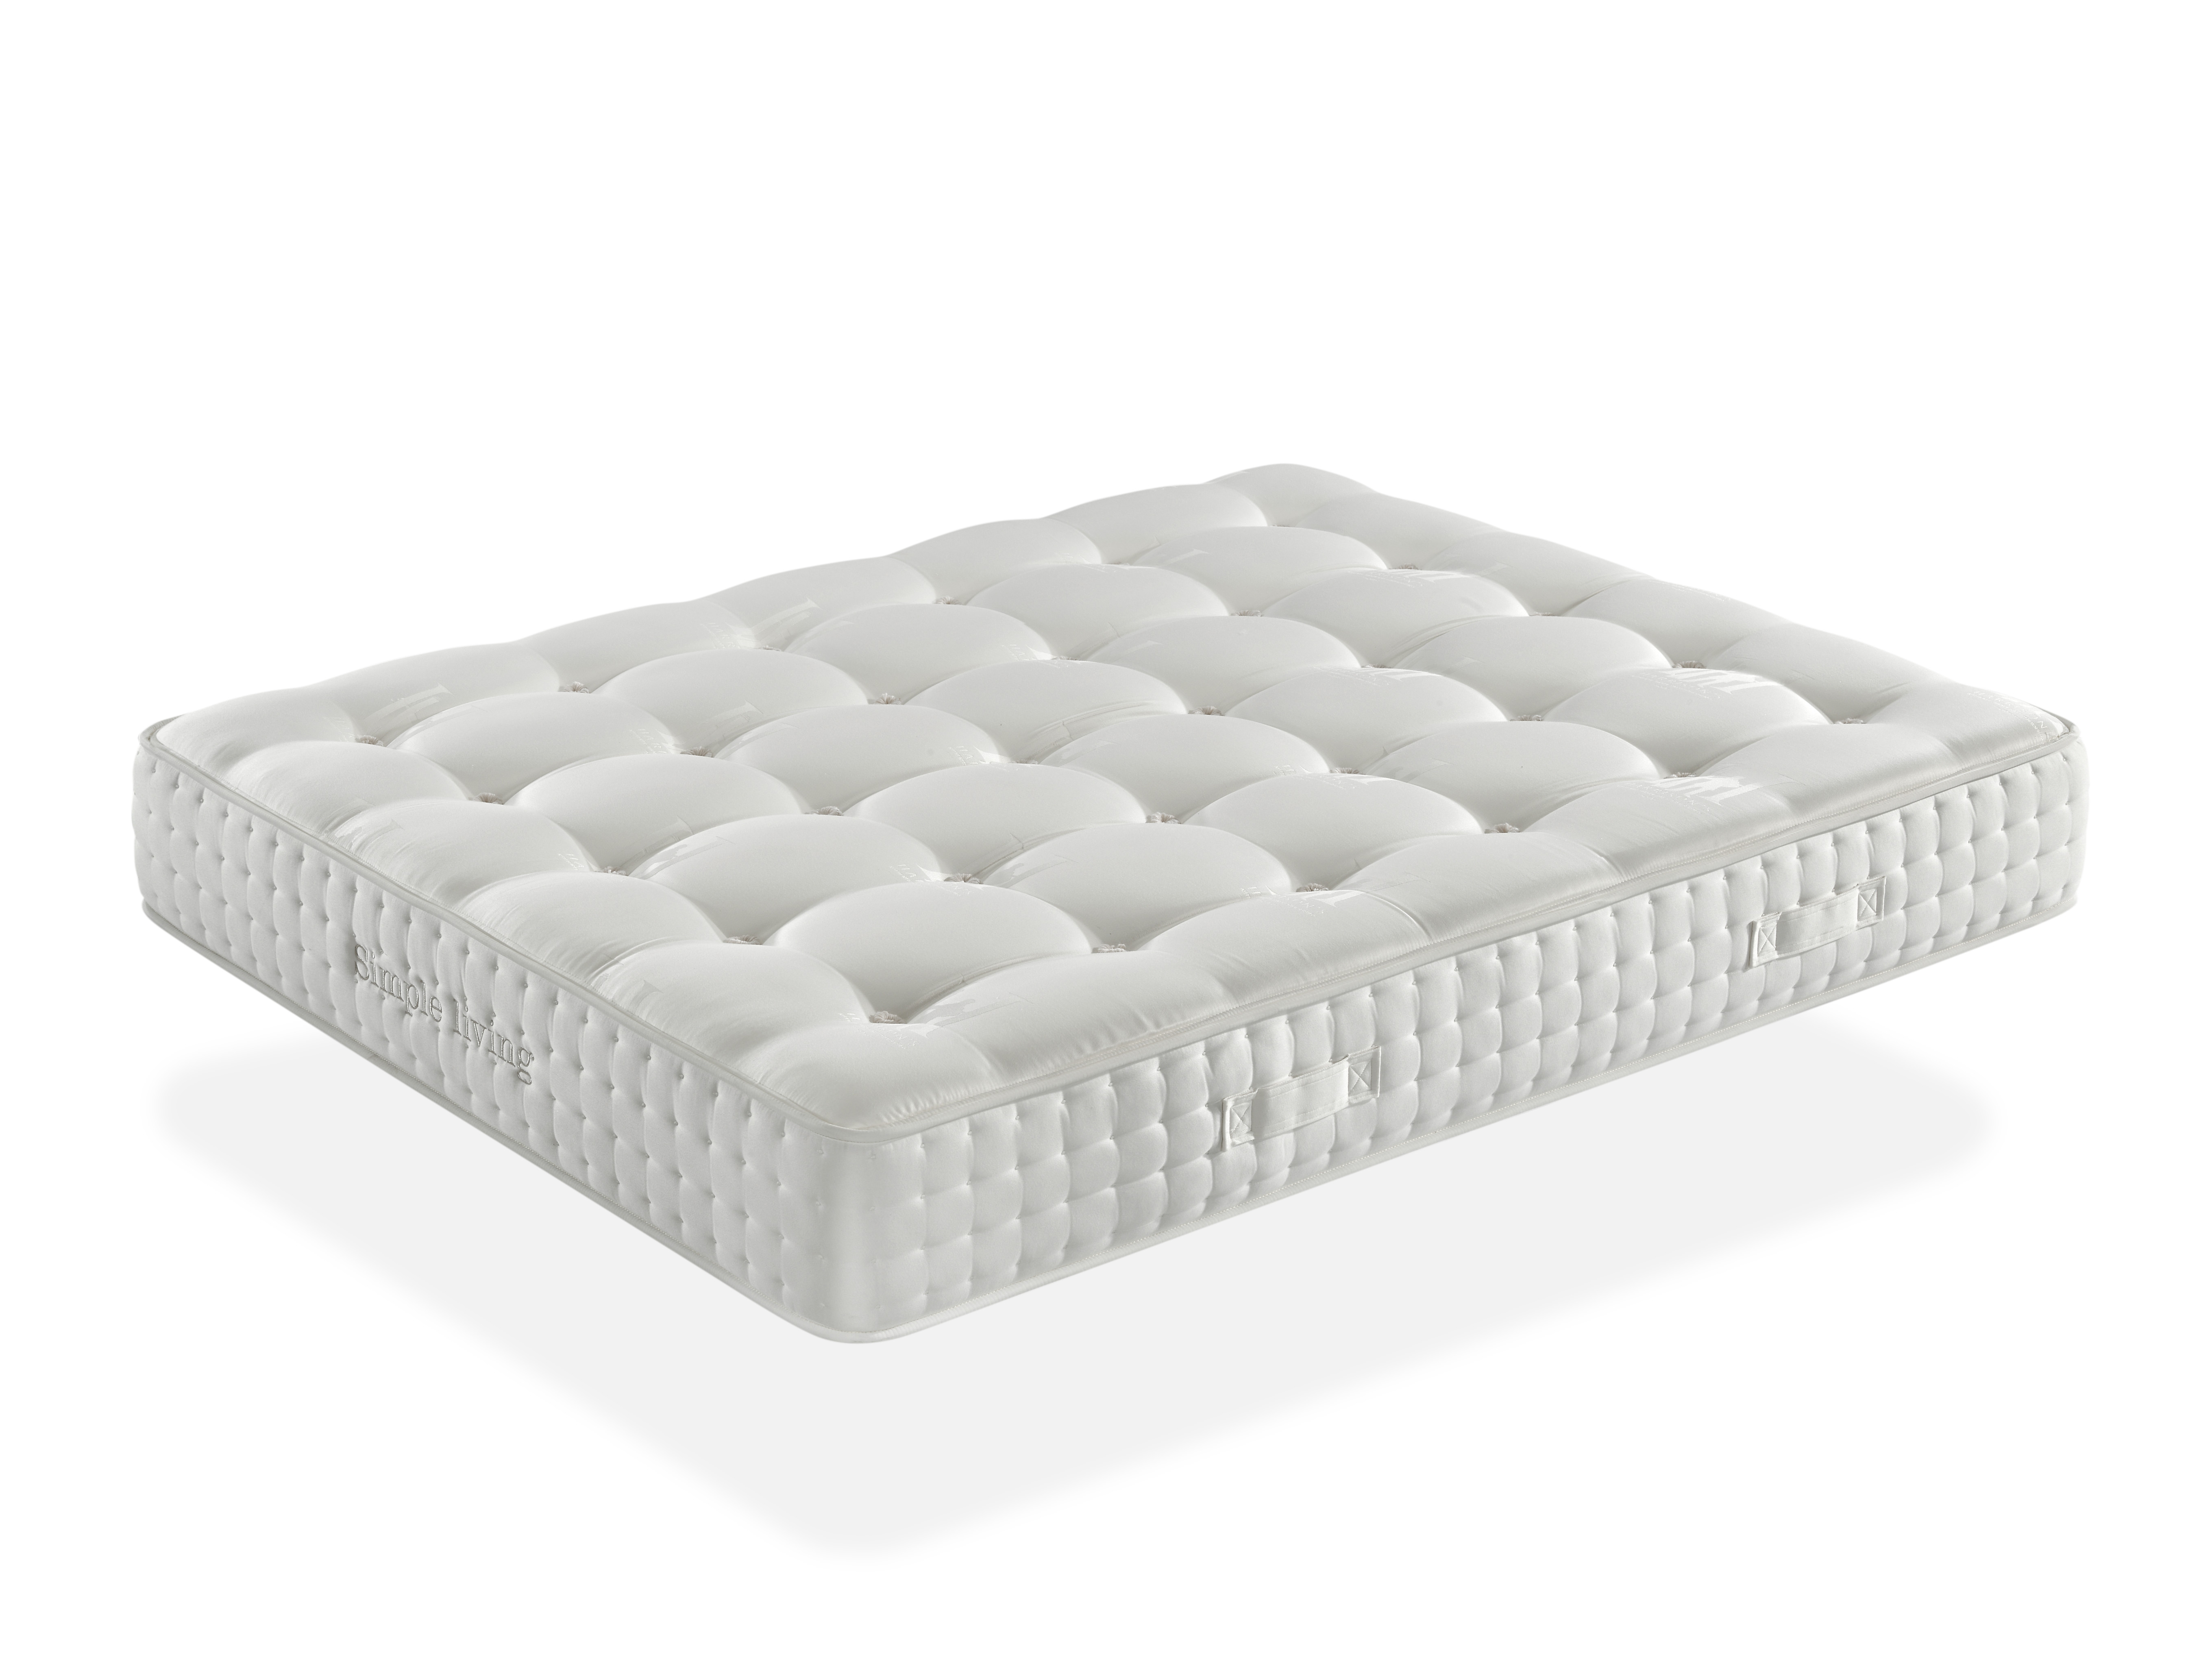 SIMPLE LIVING mattress, elegance and natural comfort